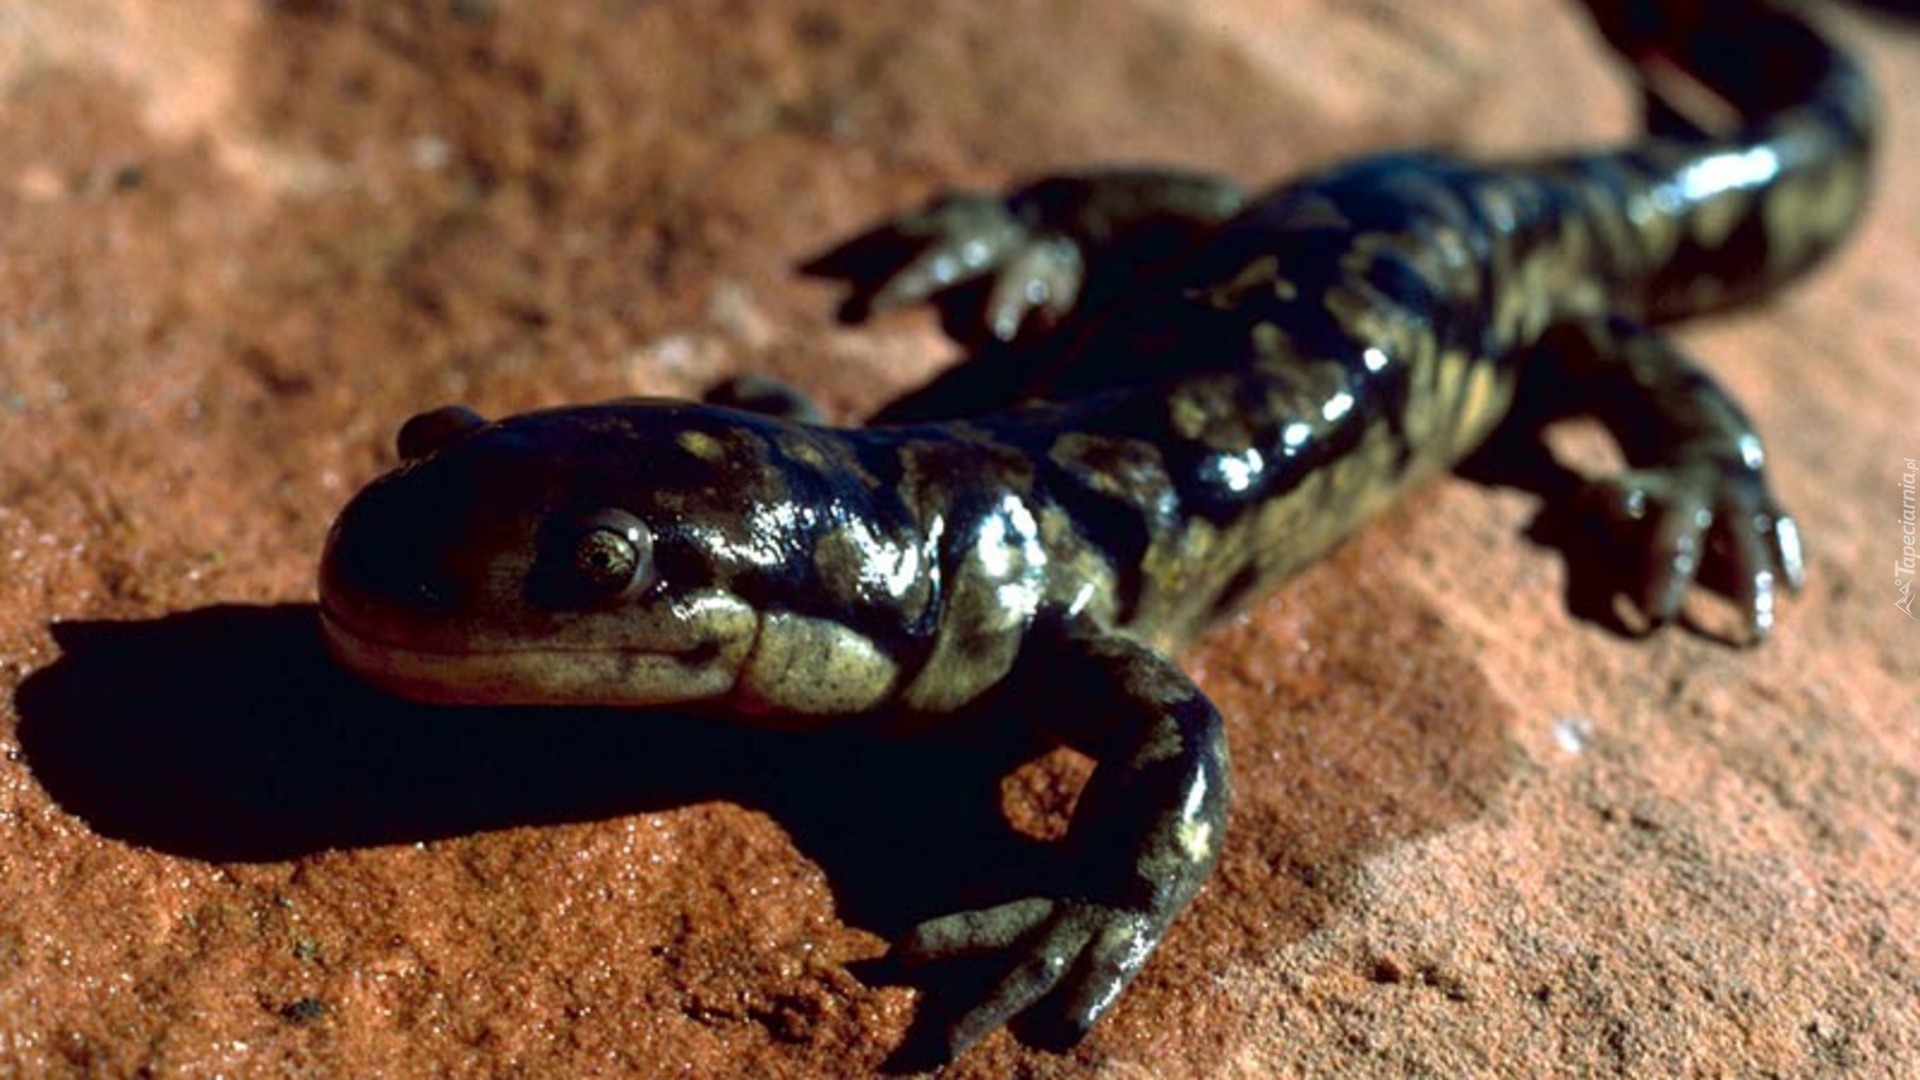 Salamandra, Piasek